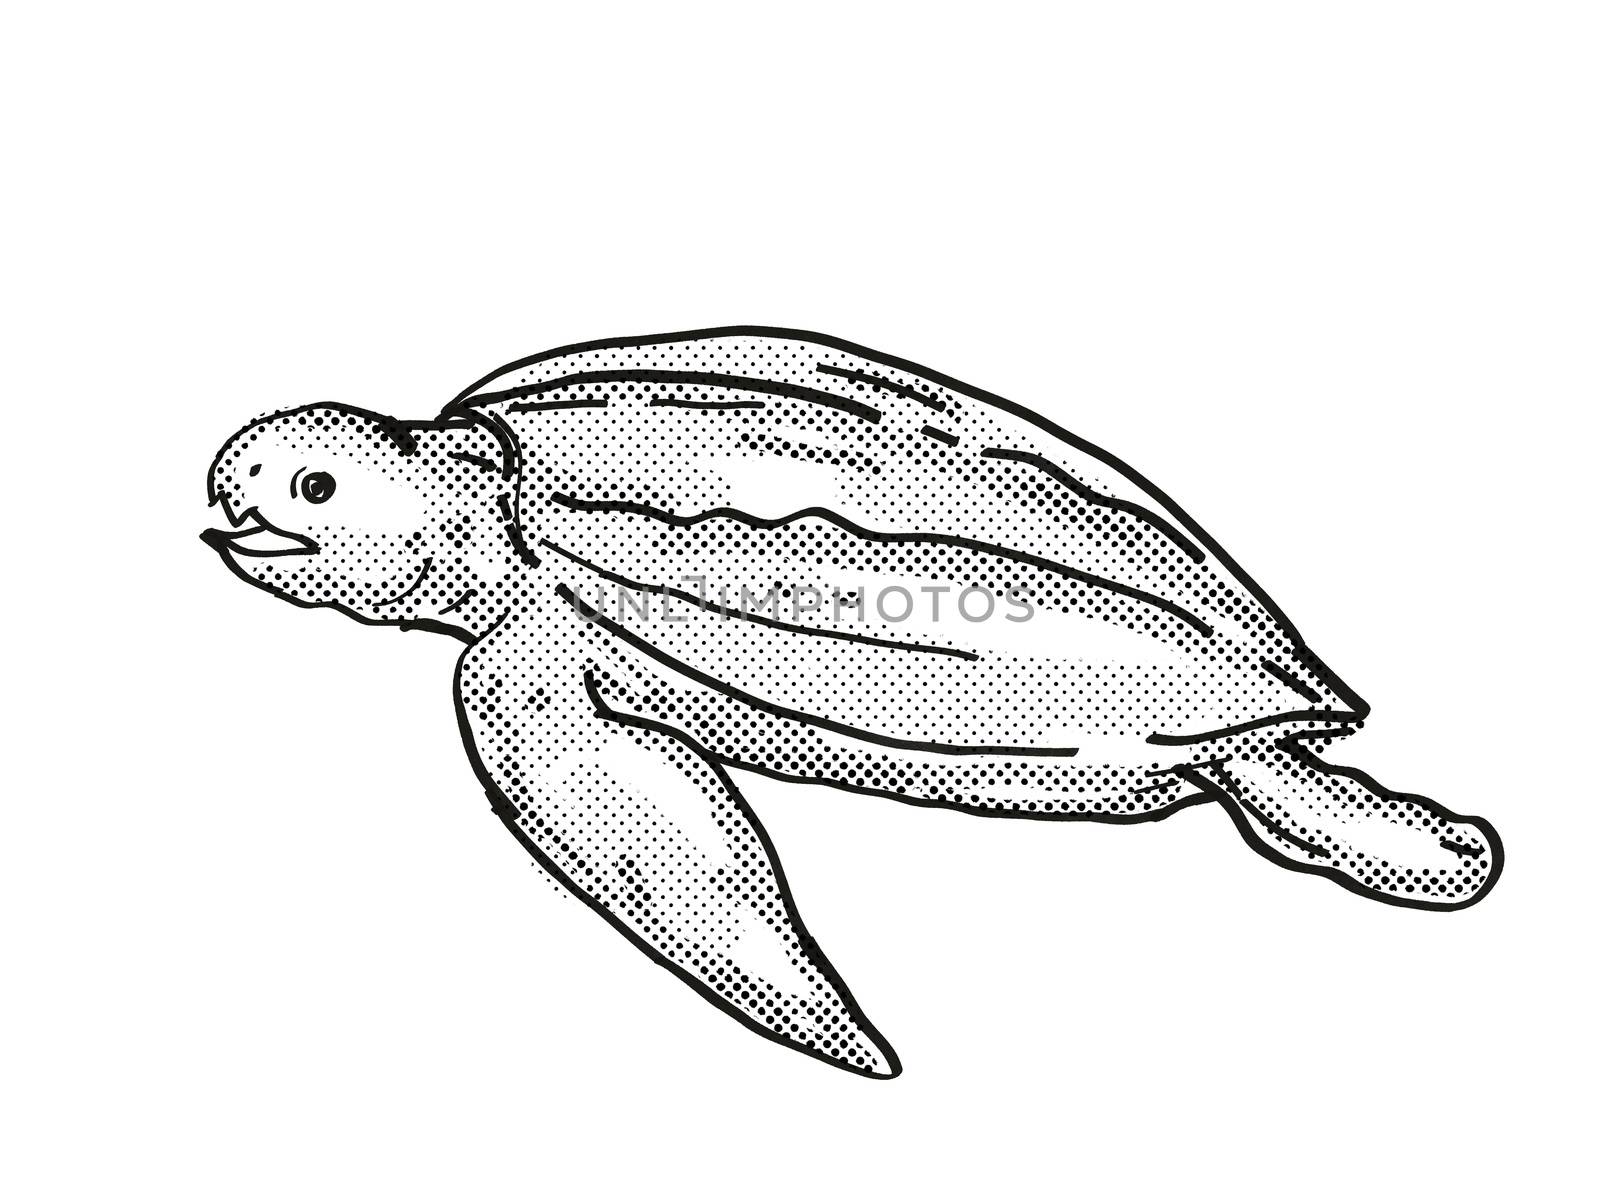 Leatherback Sea Turtle Endangered Wildlife Cartoon Drawing by patrimonio